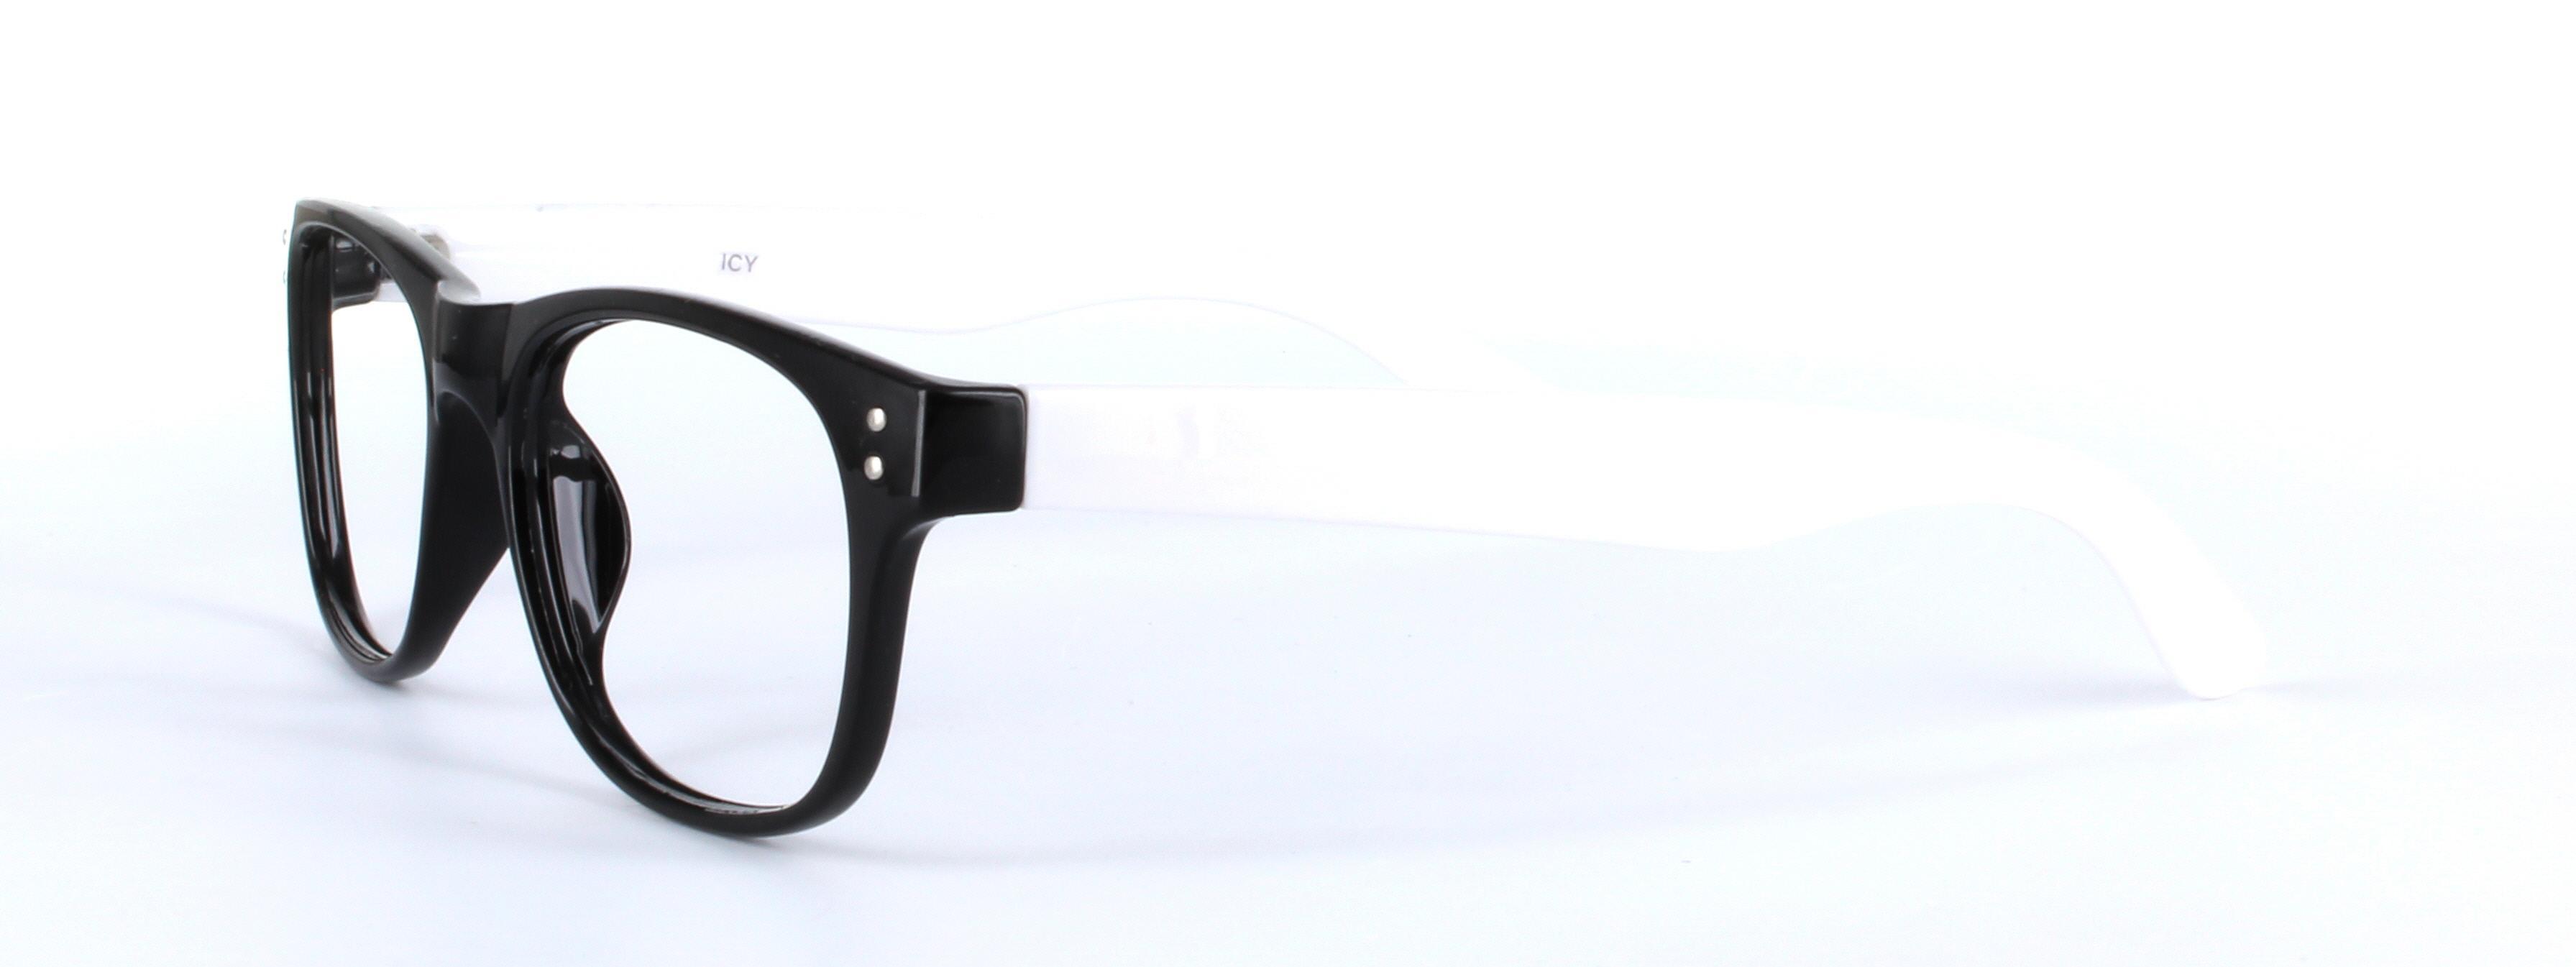 Brazil Black and White Full Rim Oval Plastic Glasses - Image View 2